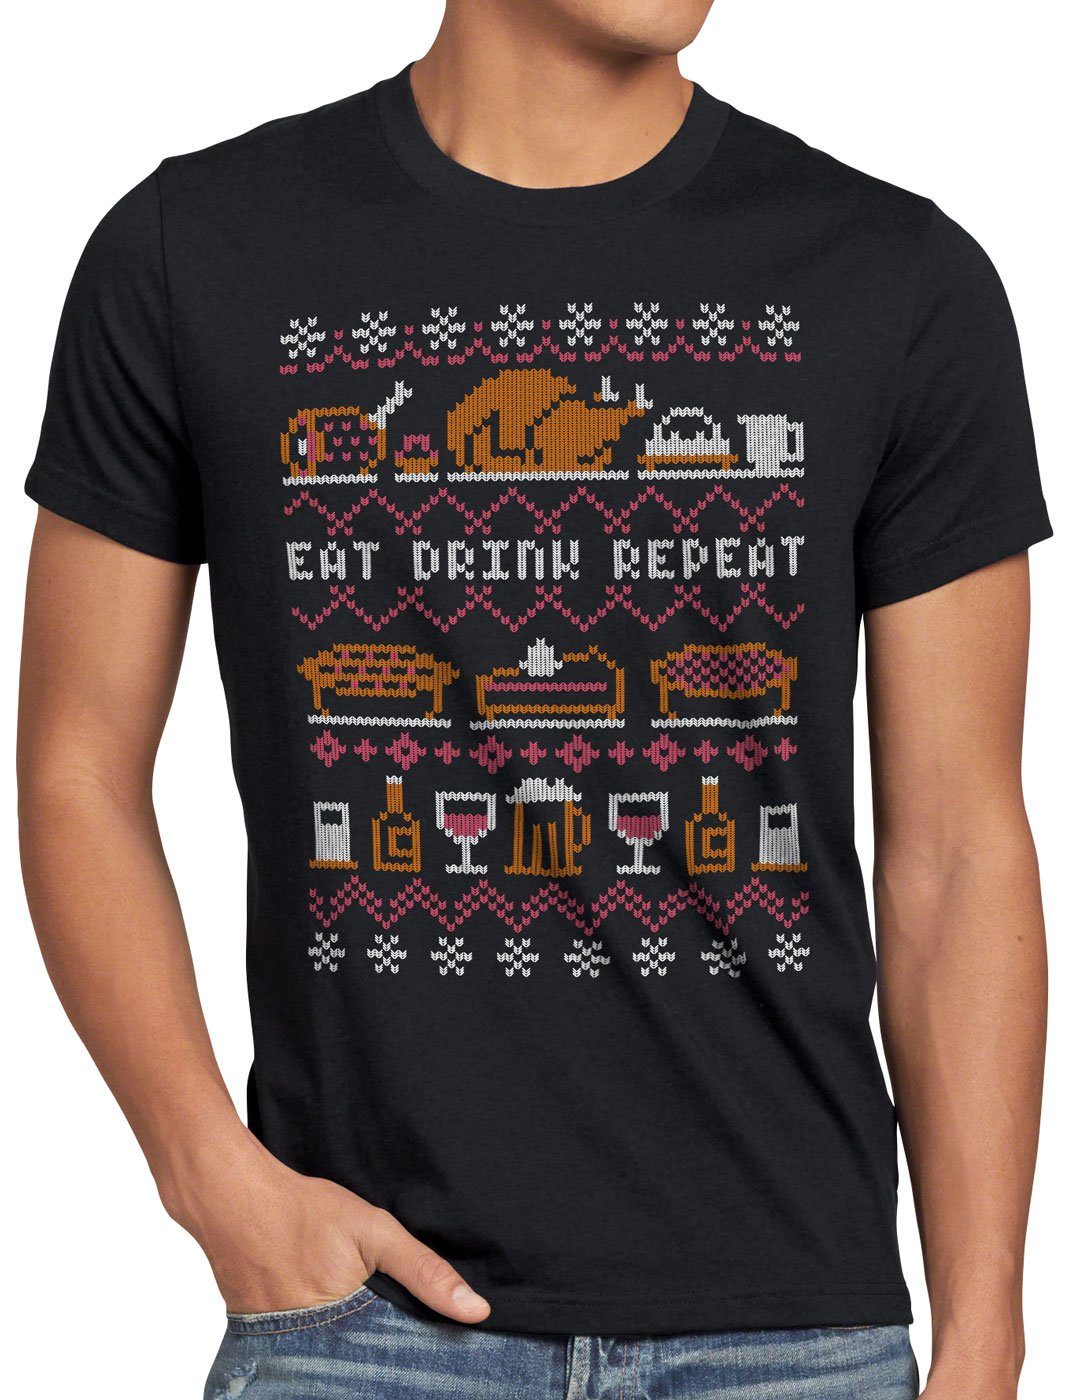 style3 Print-Shirt Herren T-Shirt Eat Drink Repeat Ugly Sweater weihnachtsessen fressen feiertage x-mas pulli schwarz